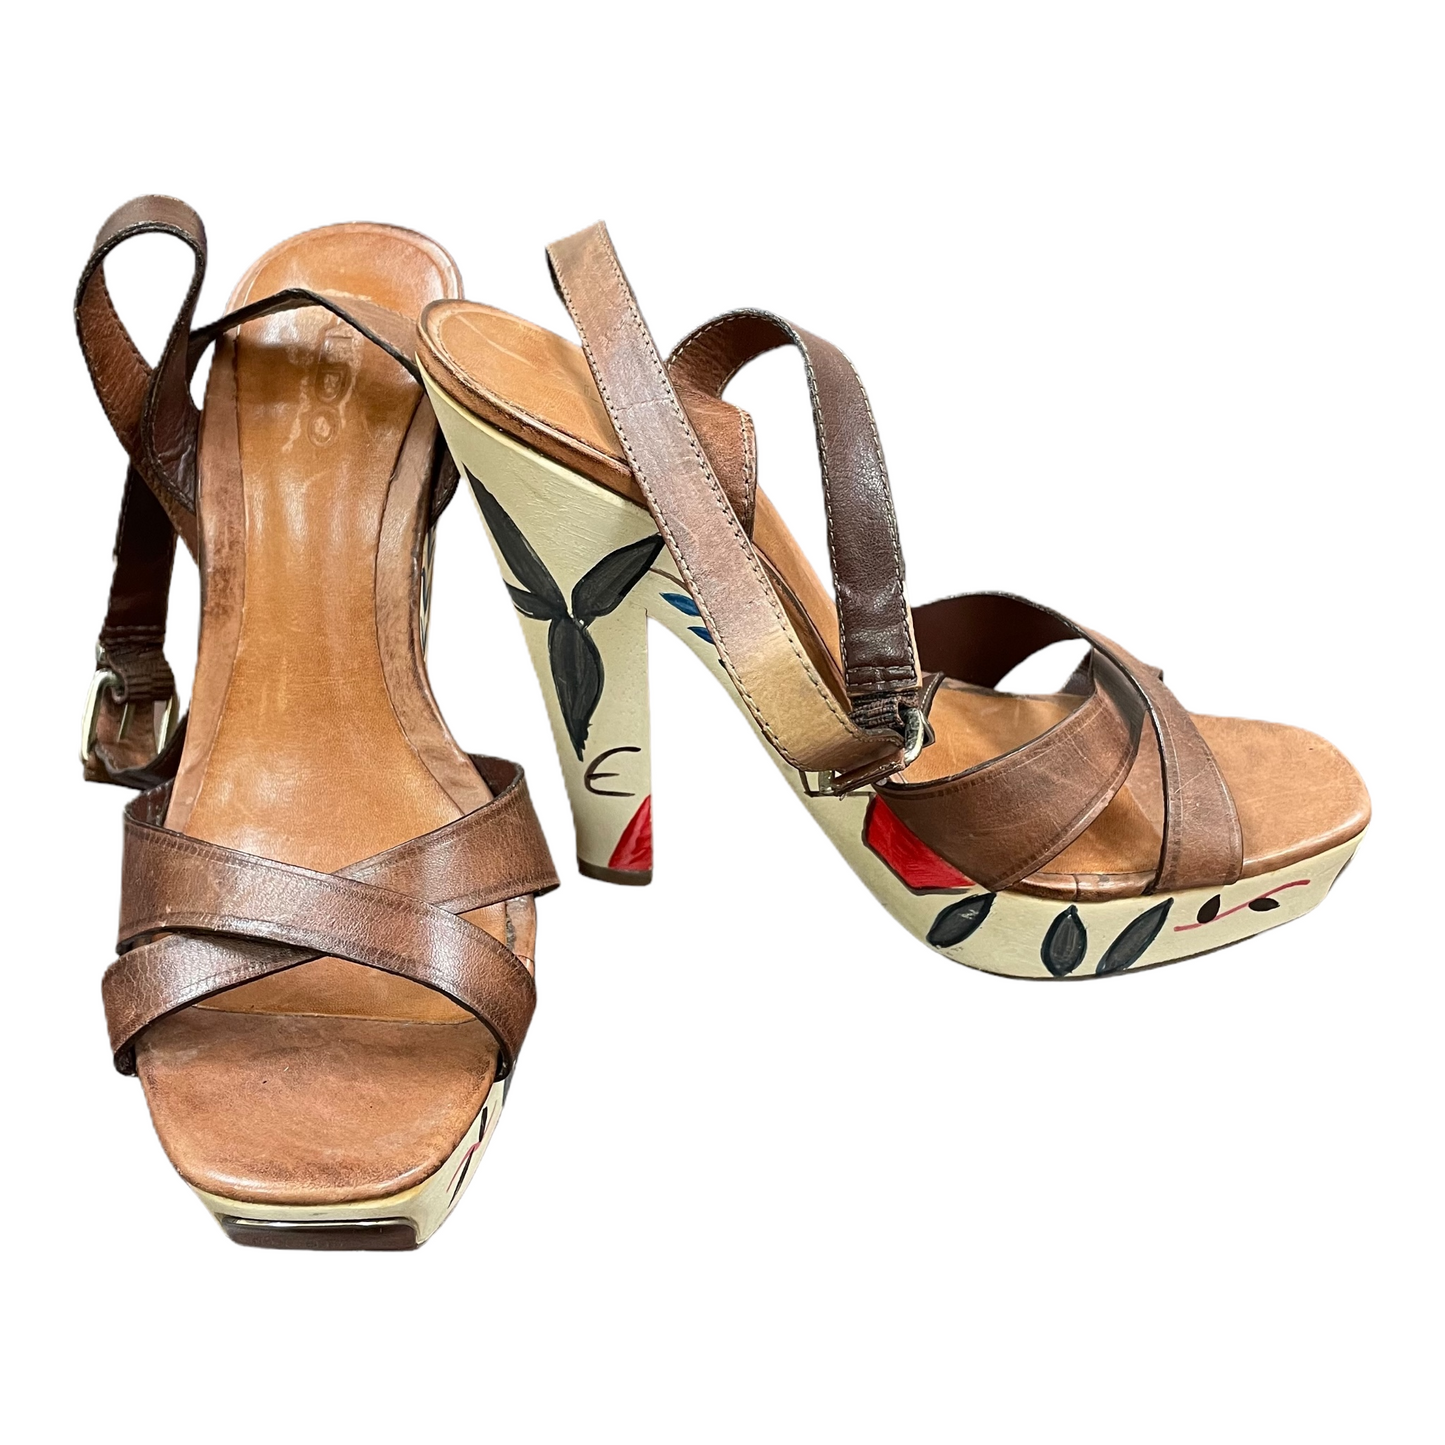 Sandals Heels Stiletto By Aldo  Size: 9.5